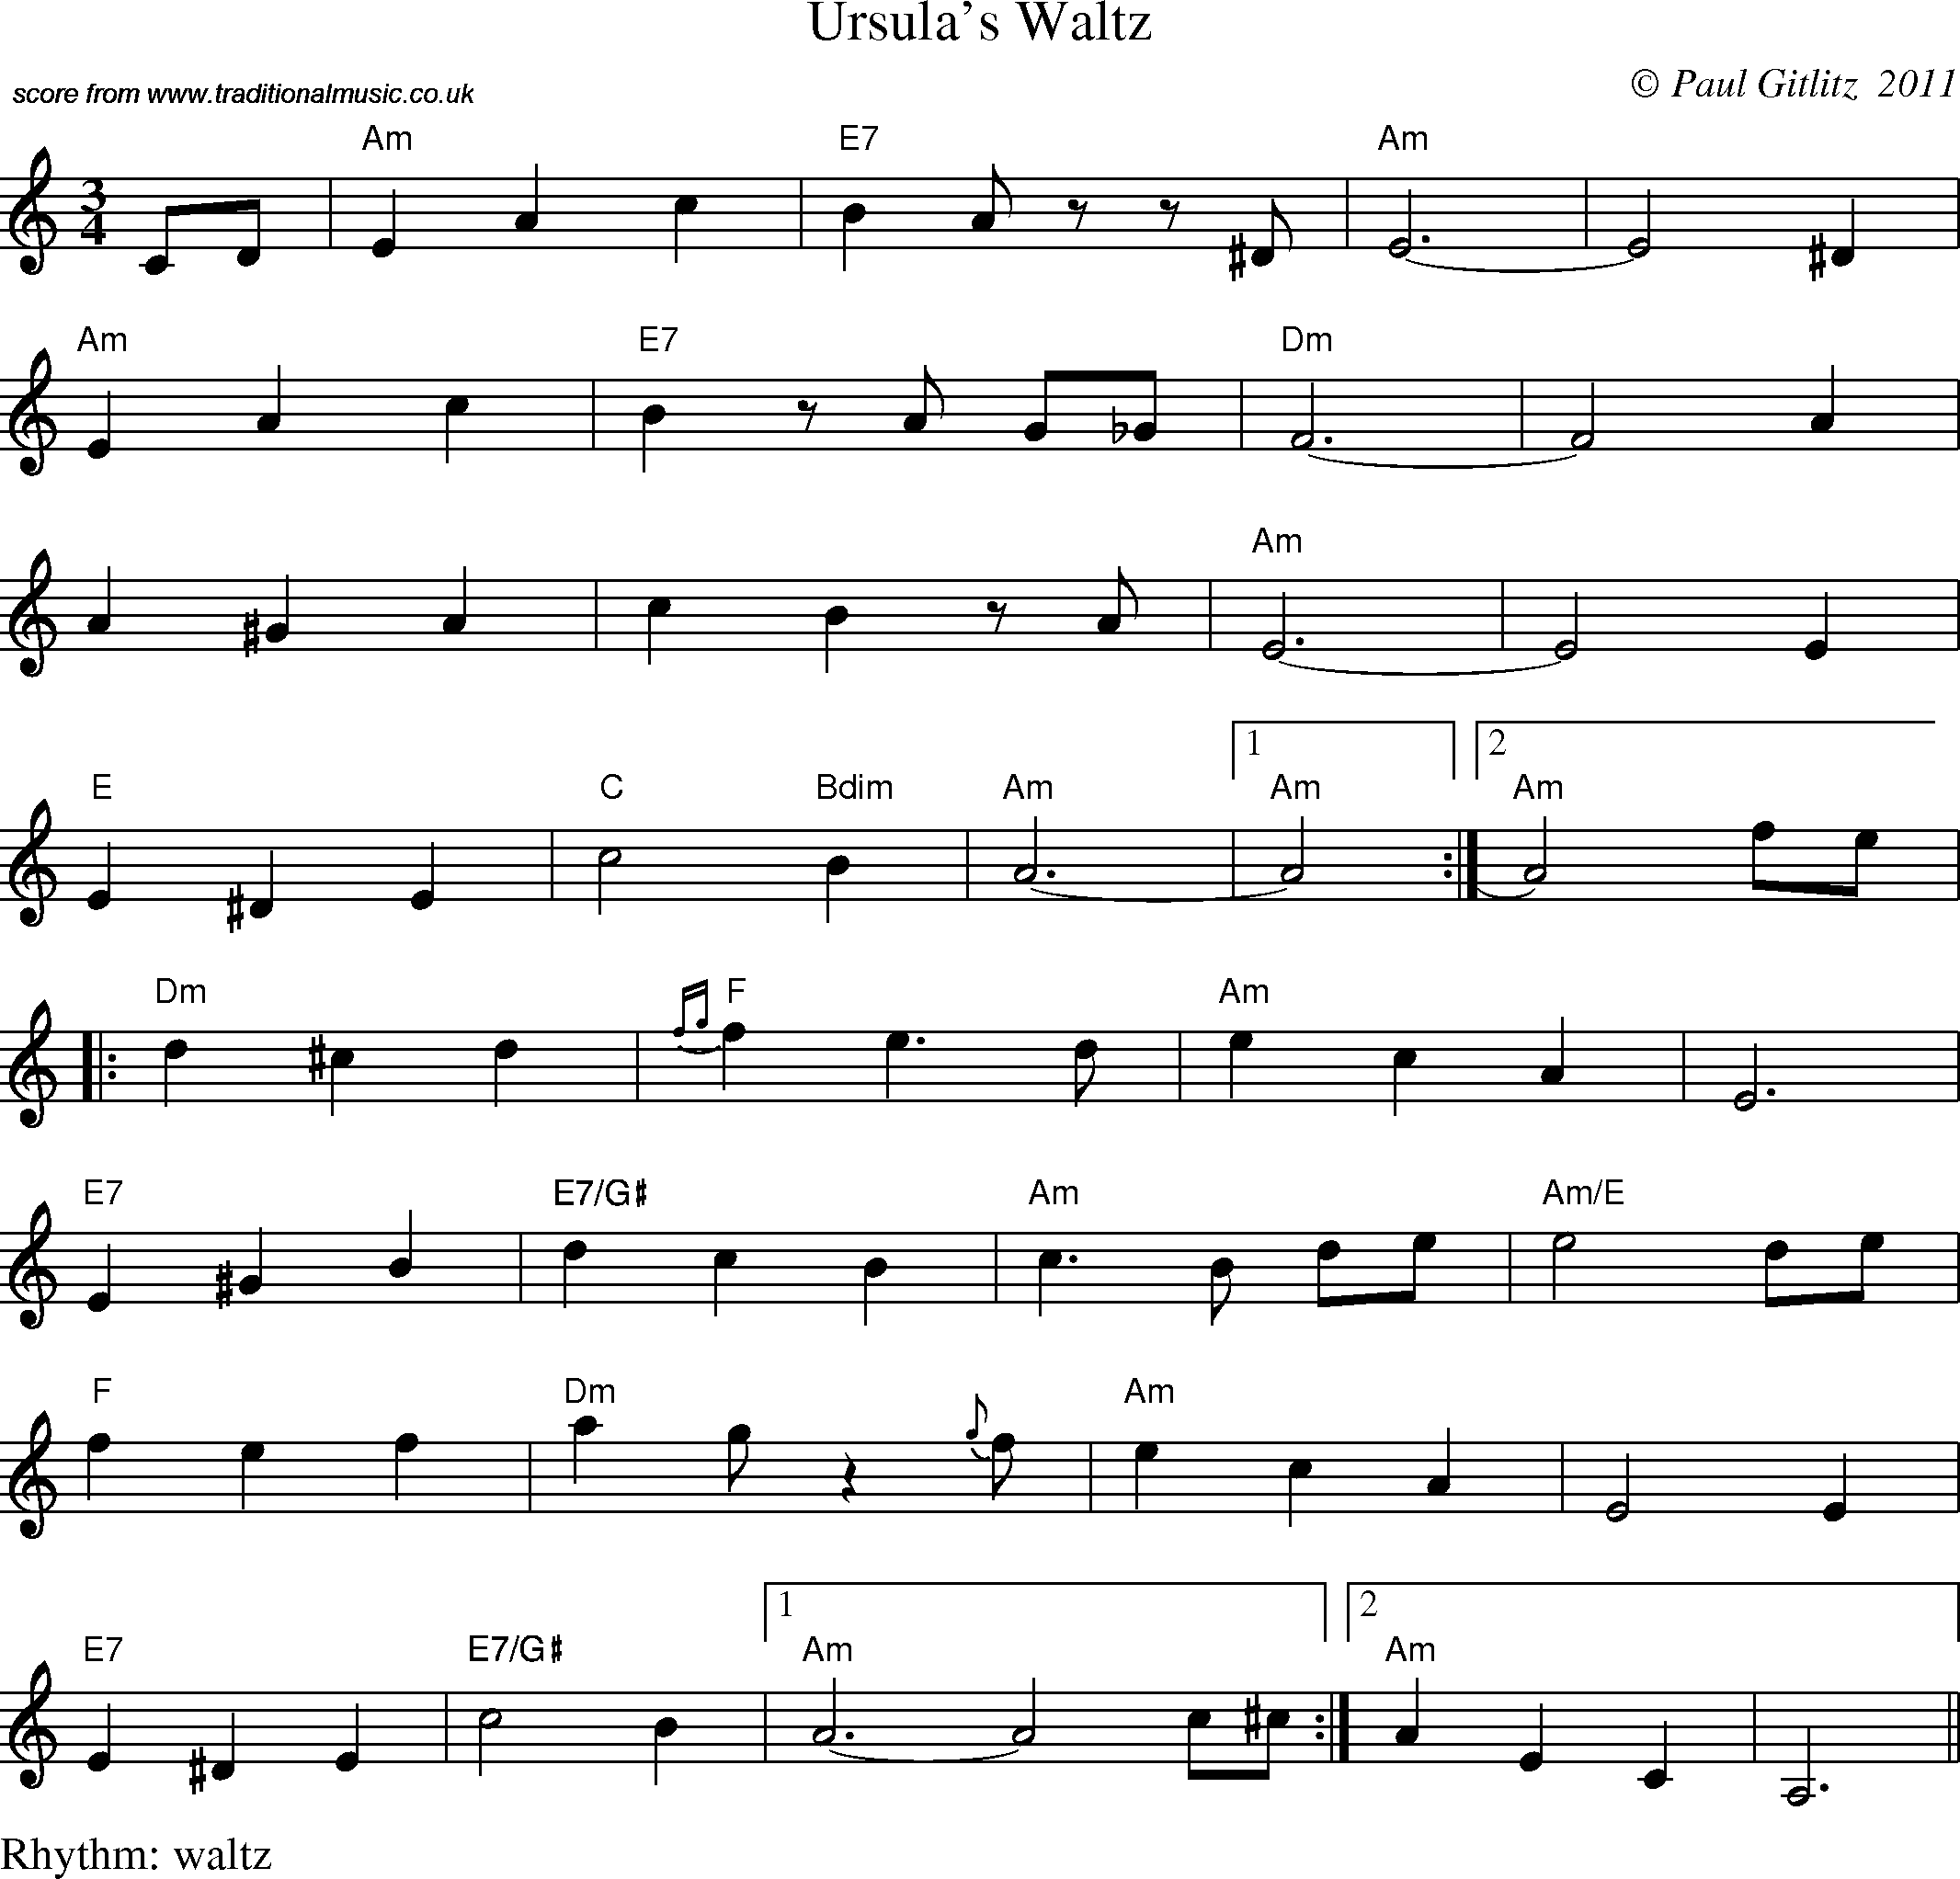 Sheet Music Score for Waltz - Ursula's Waltz